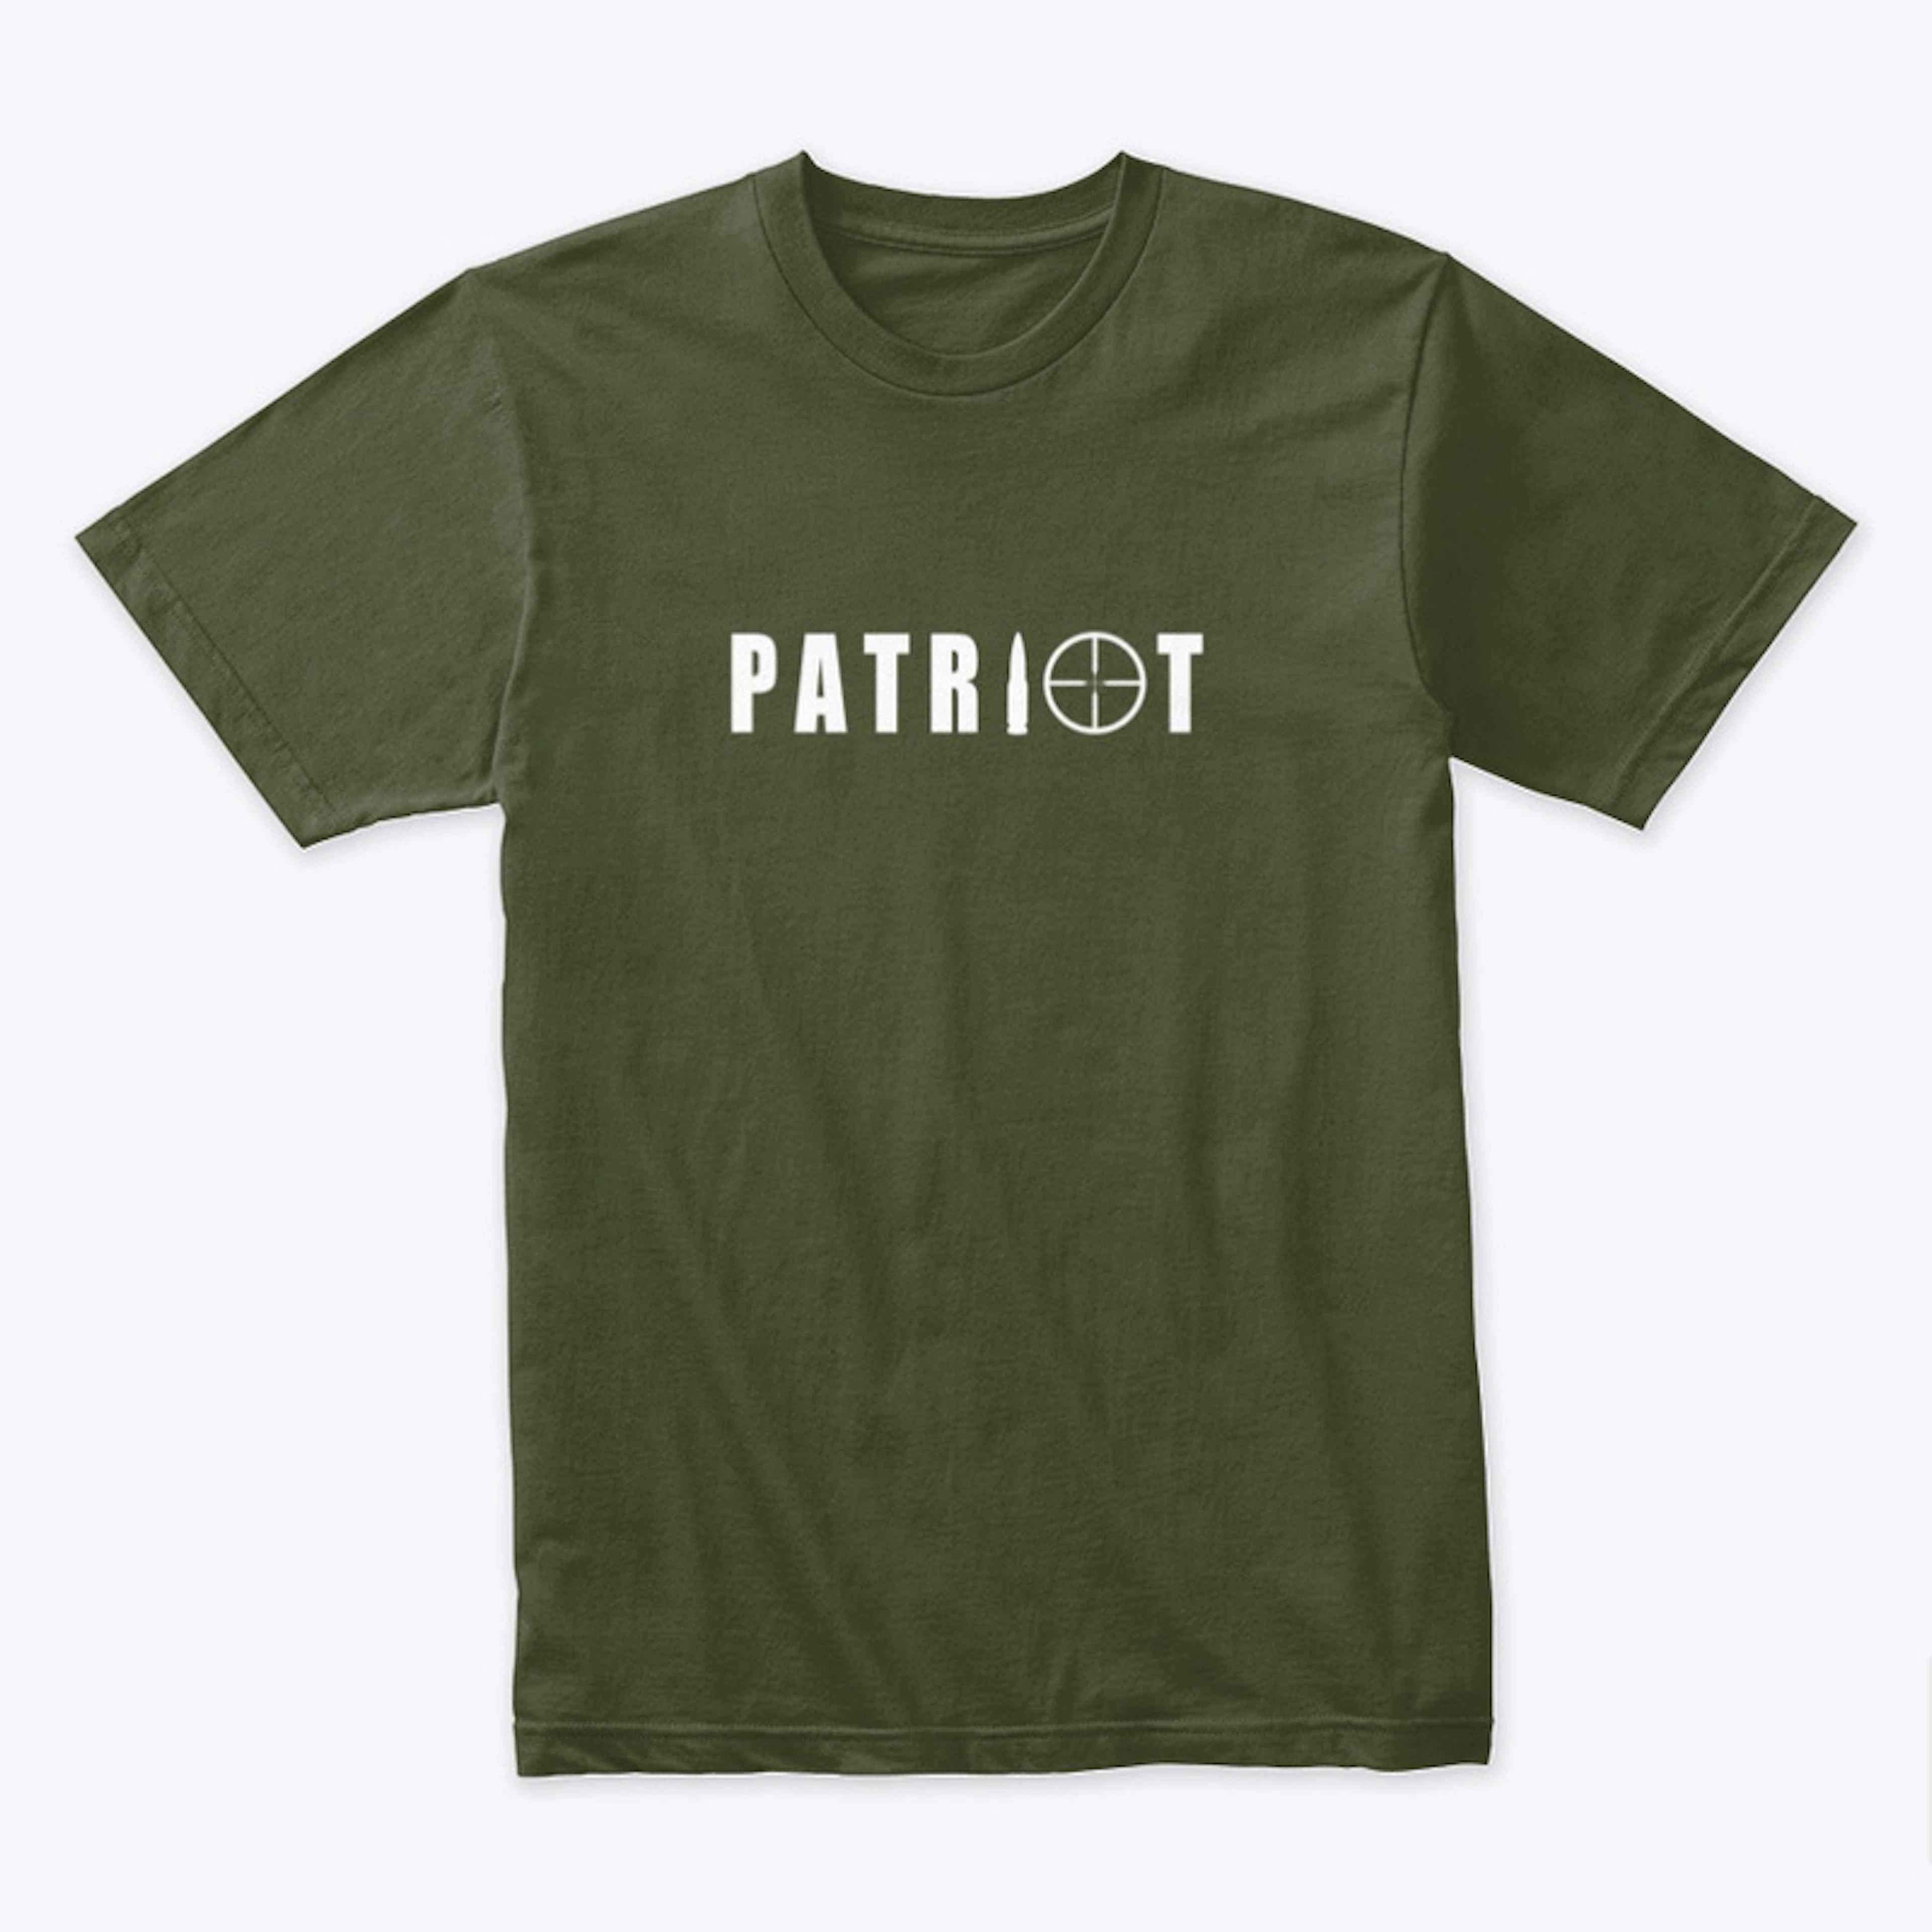 Patriot 